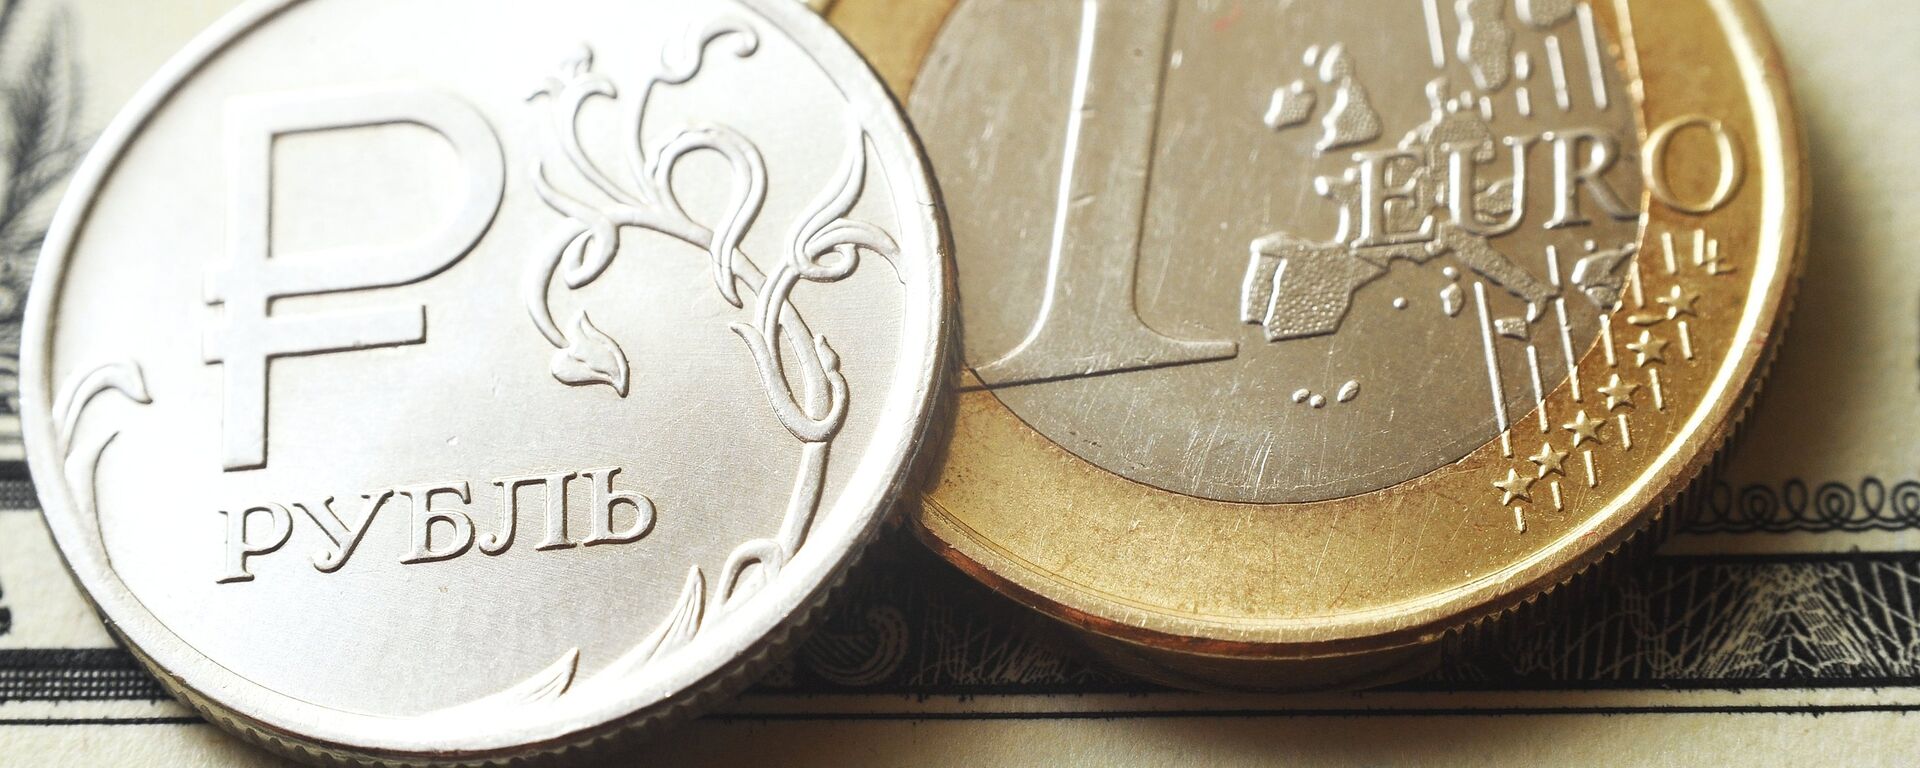 Монеты номиналом один рубль, один евро на банкноте один доллар США. - Sputnik Абхазия, 1920, 05.01.2021